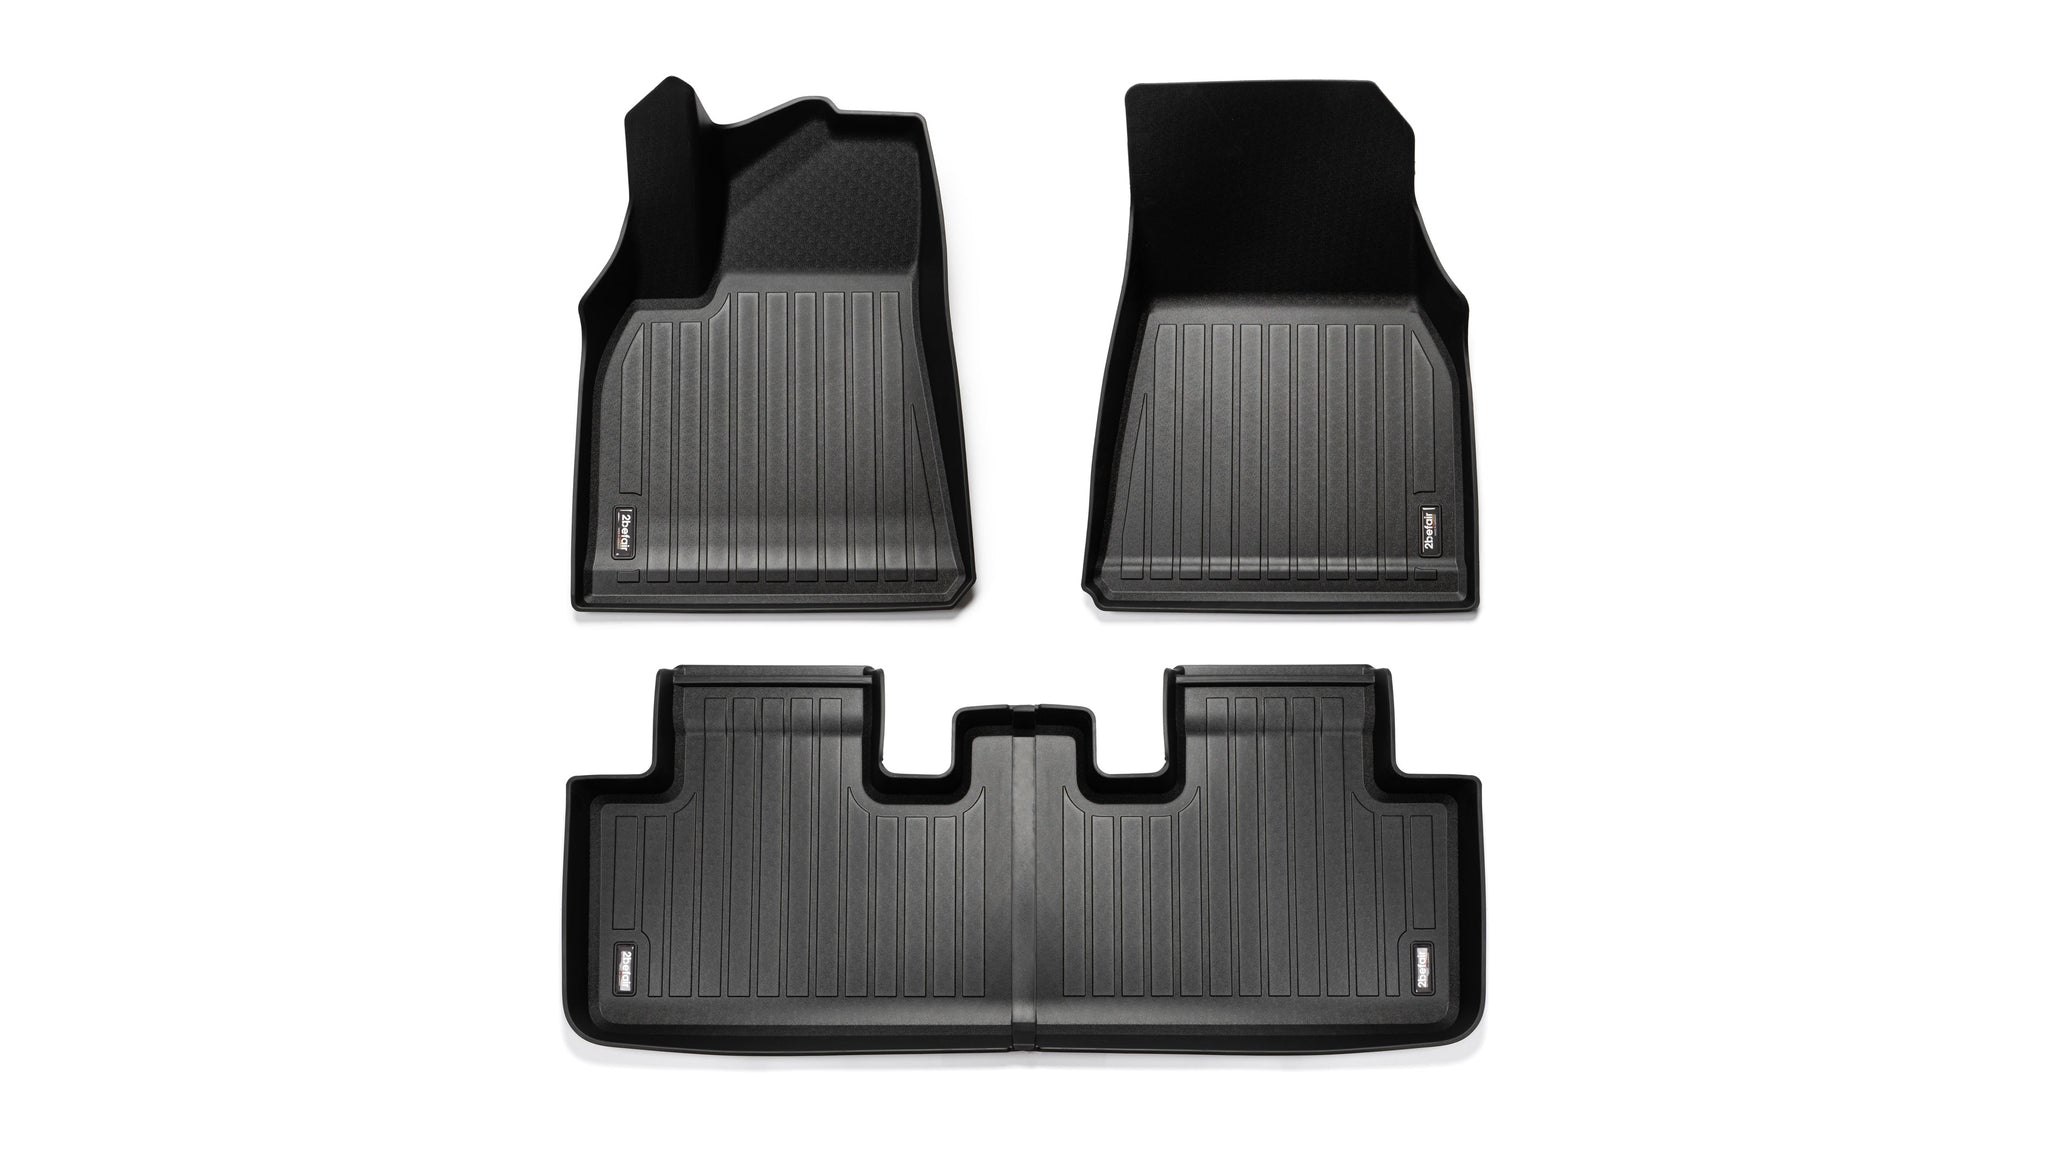 2befair rubber mat set interior for the Tesla Model 3